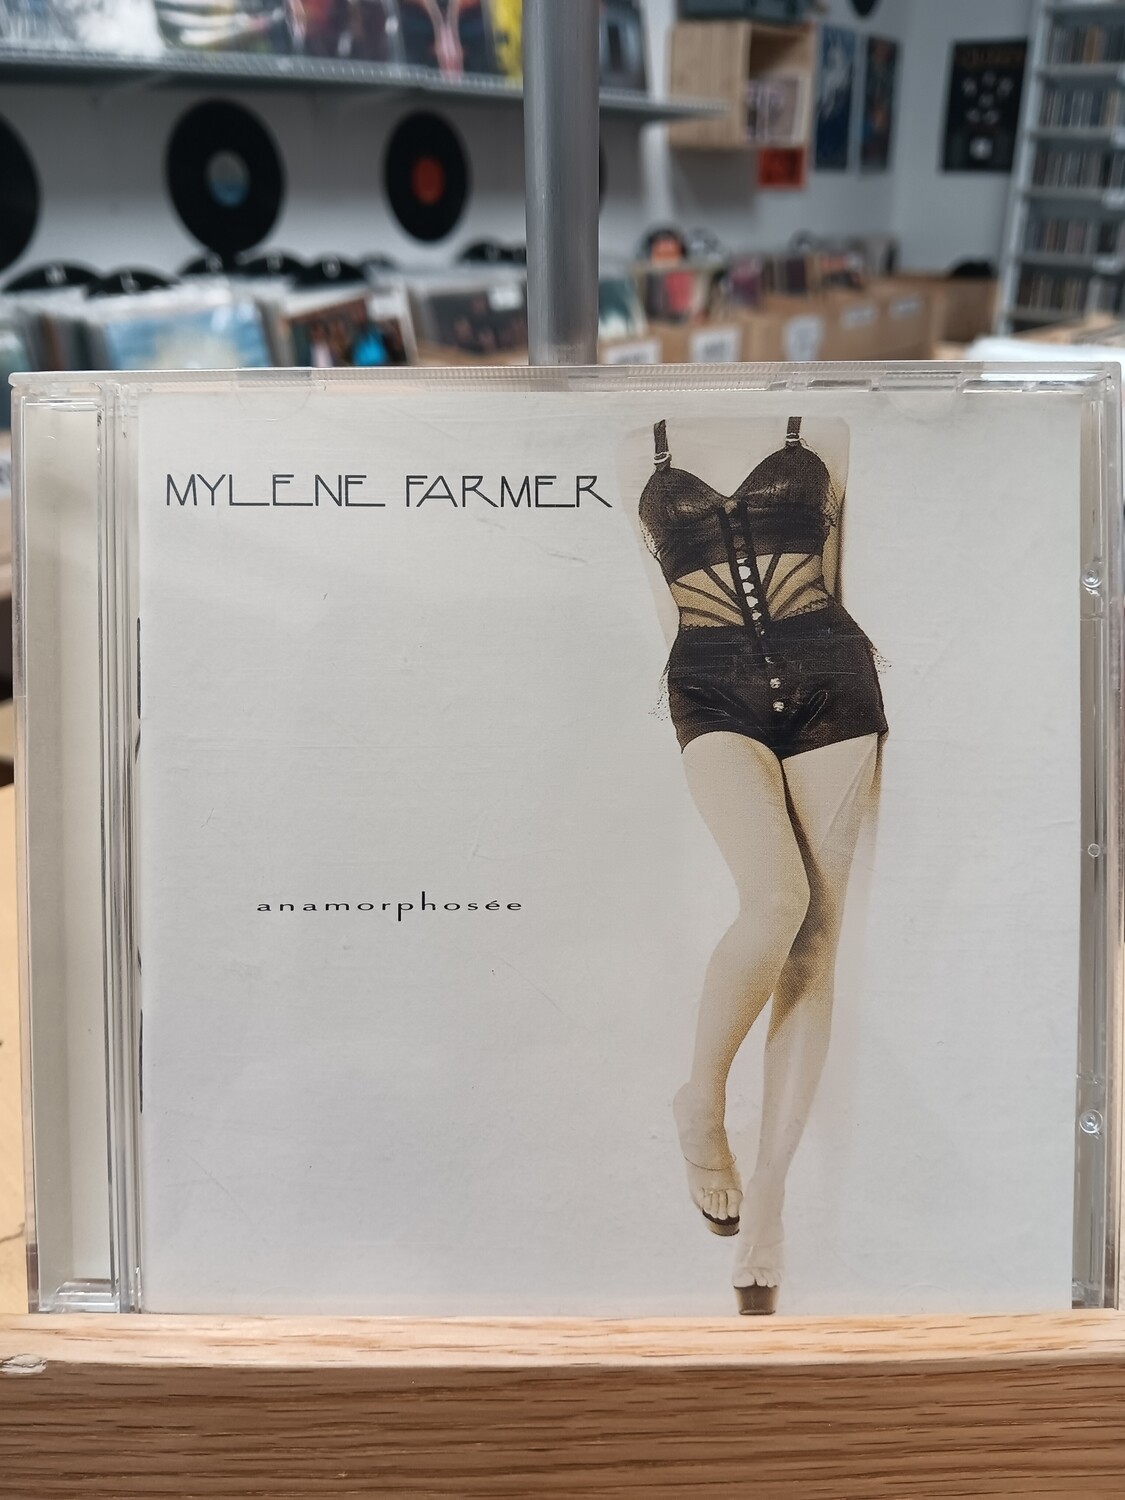 Mylene Farmer - Anamorphosée (CD)